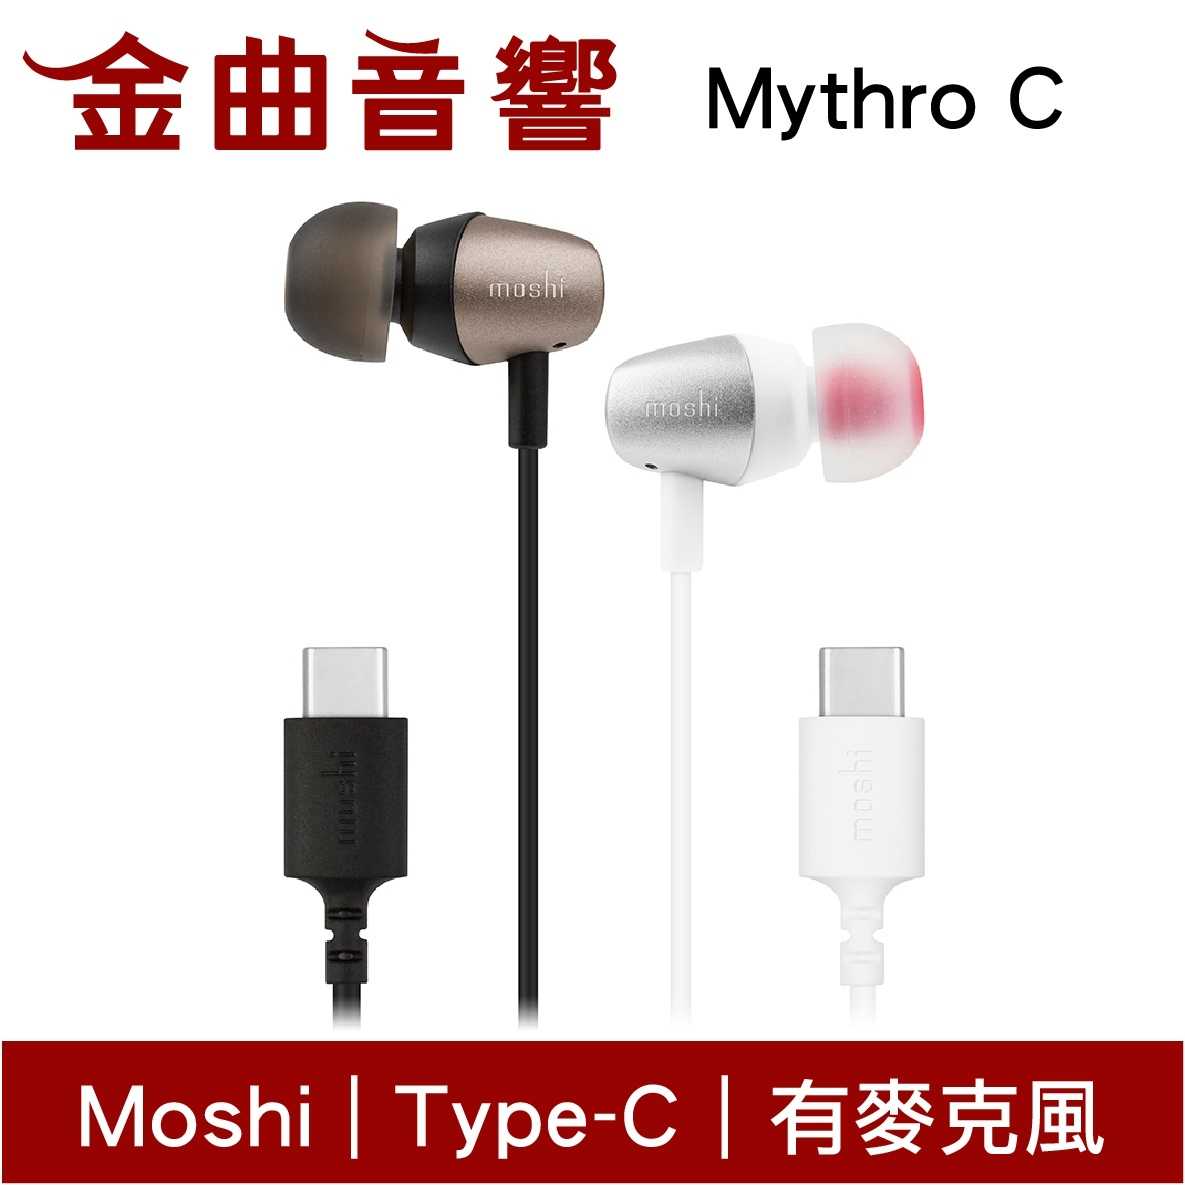 Moshi Mythro C USB Type-C 銀白色 耳機 麥克風耳機 | 金曲音響